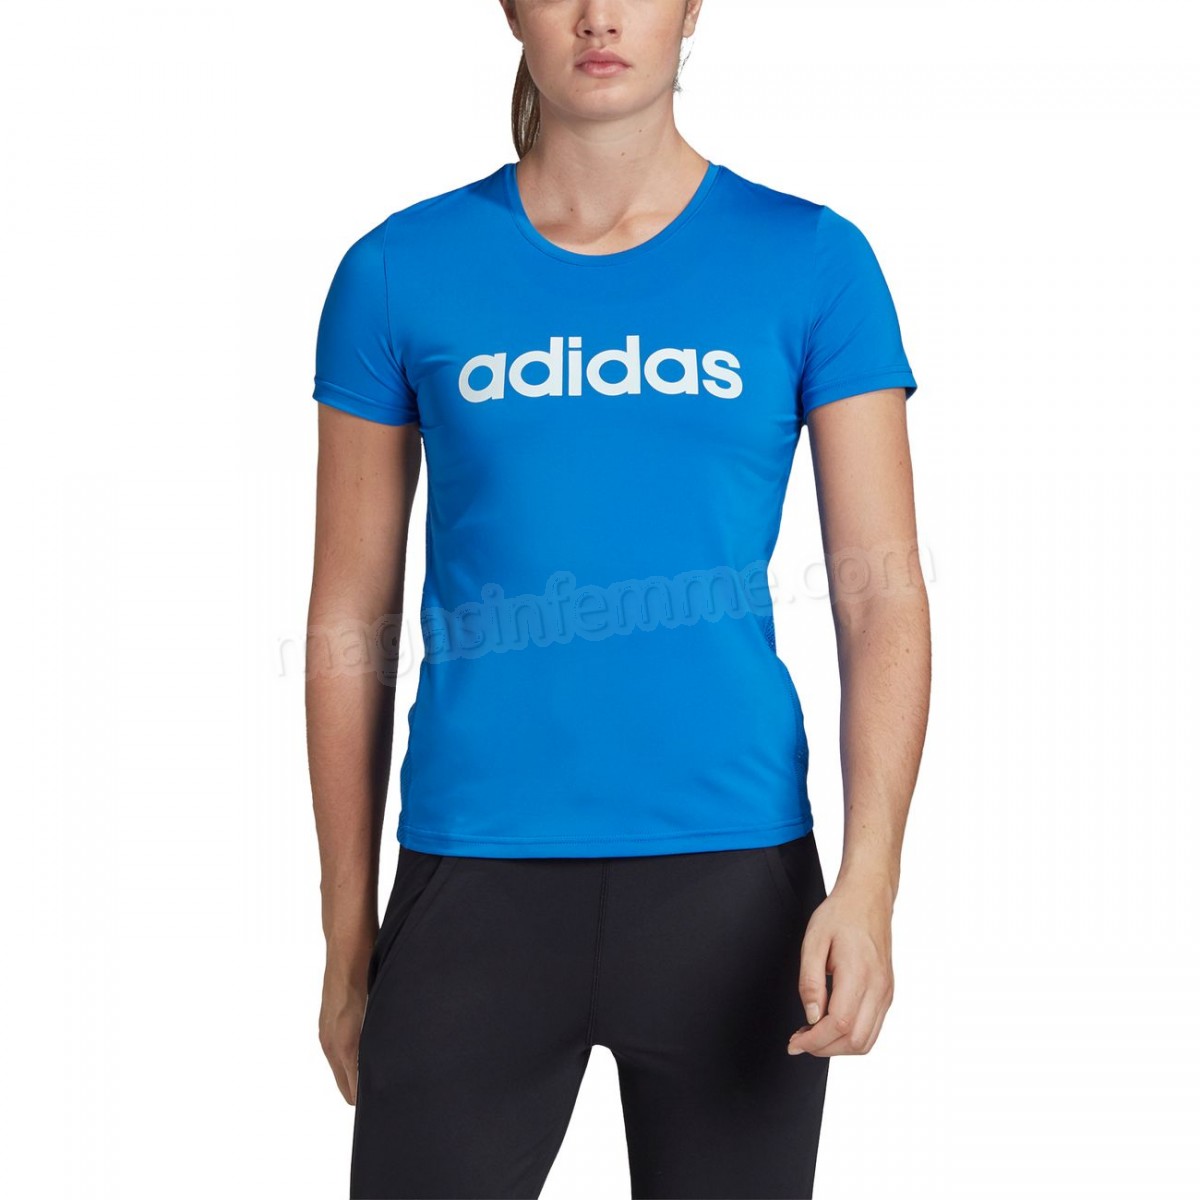 Adidas-Fitness femme ADIDAS T-shirt femme adidas Design 2 Move Logo en solde - -3